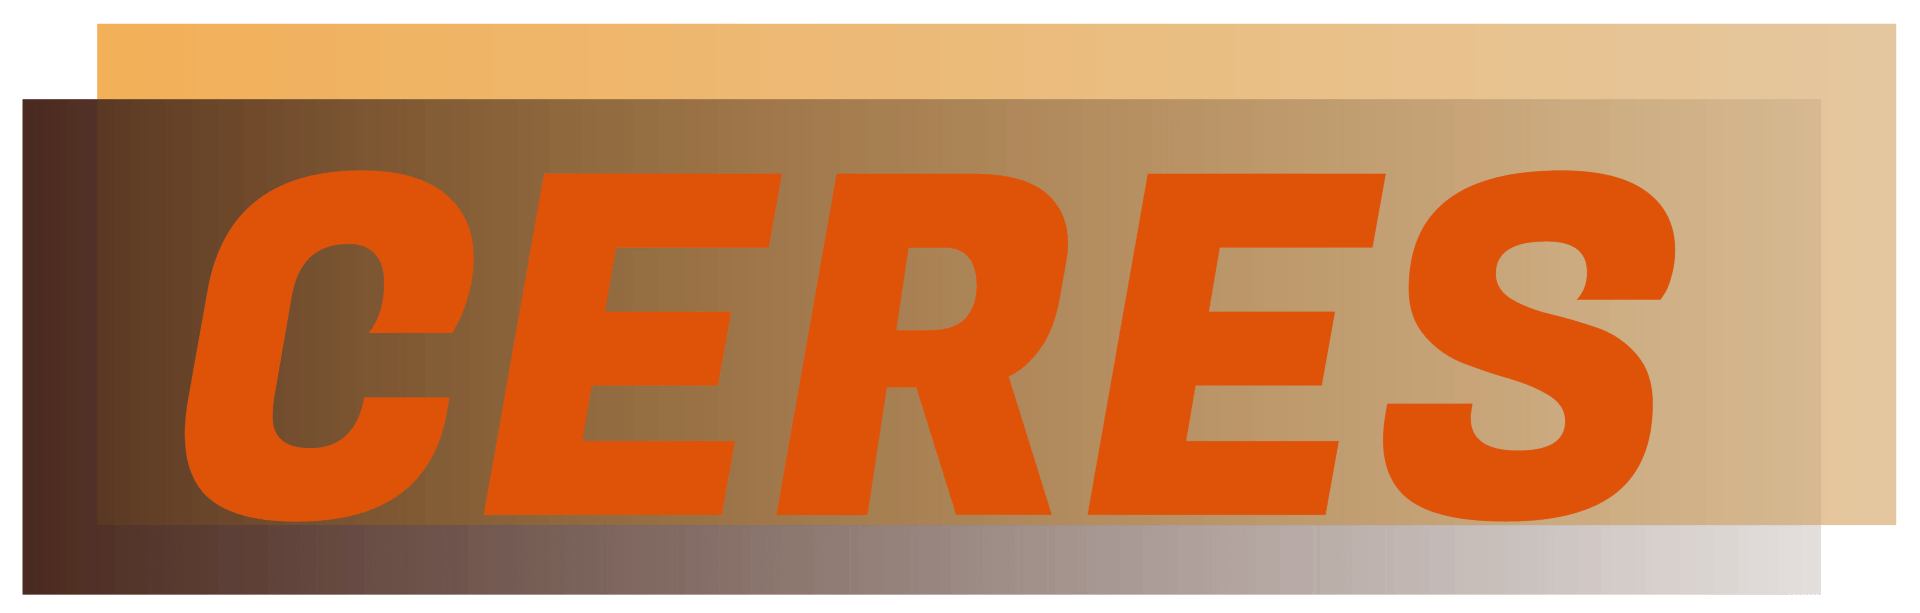 Ceres Machinery Logo